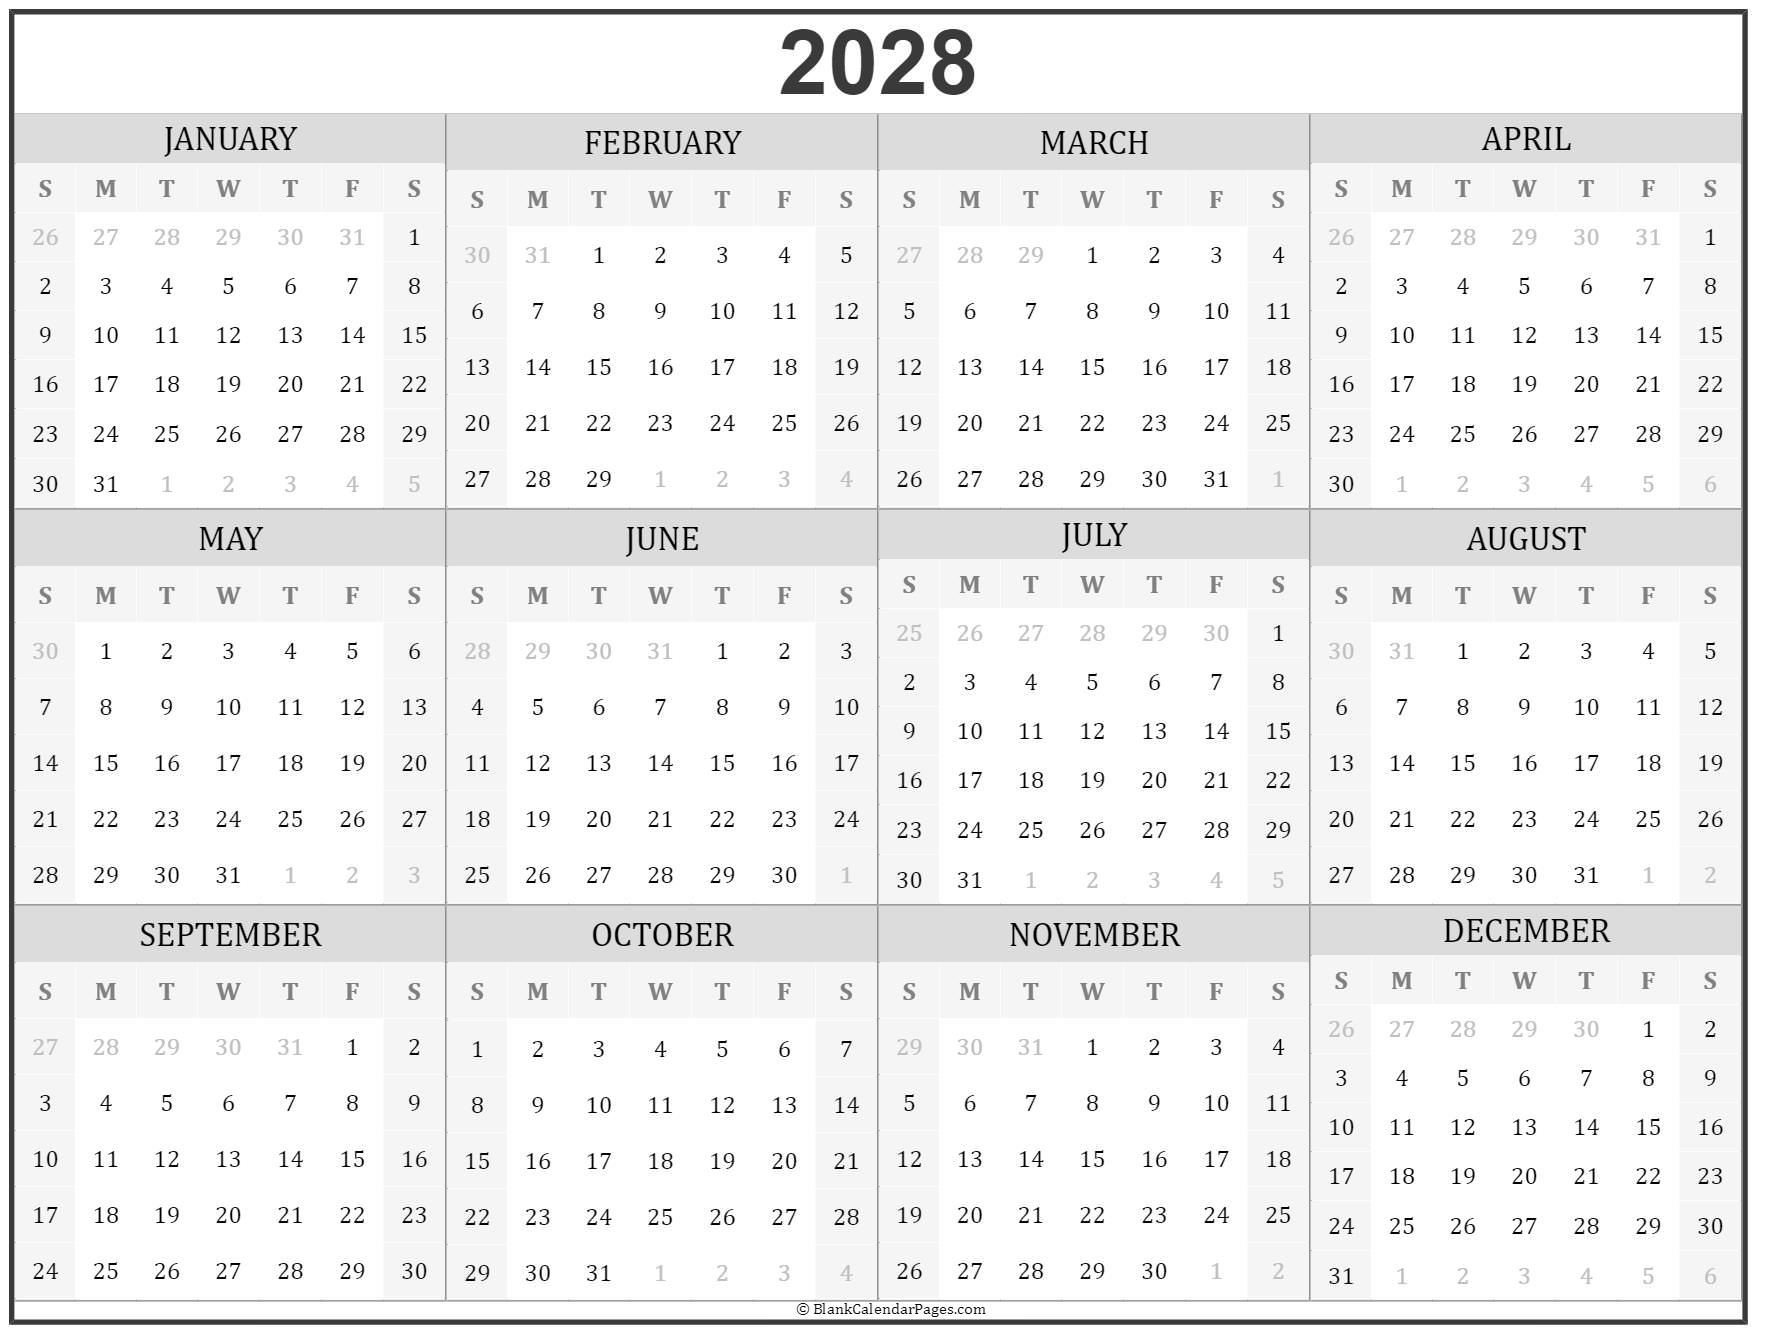 2028-year-calendar-yearly-printable